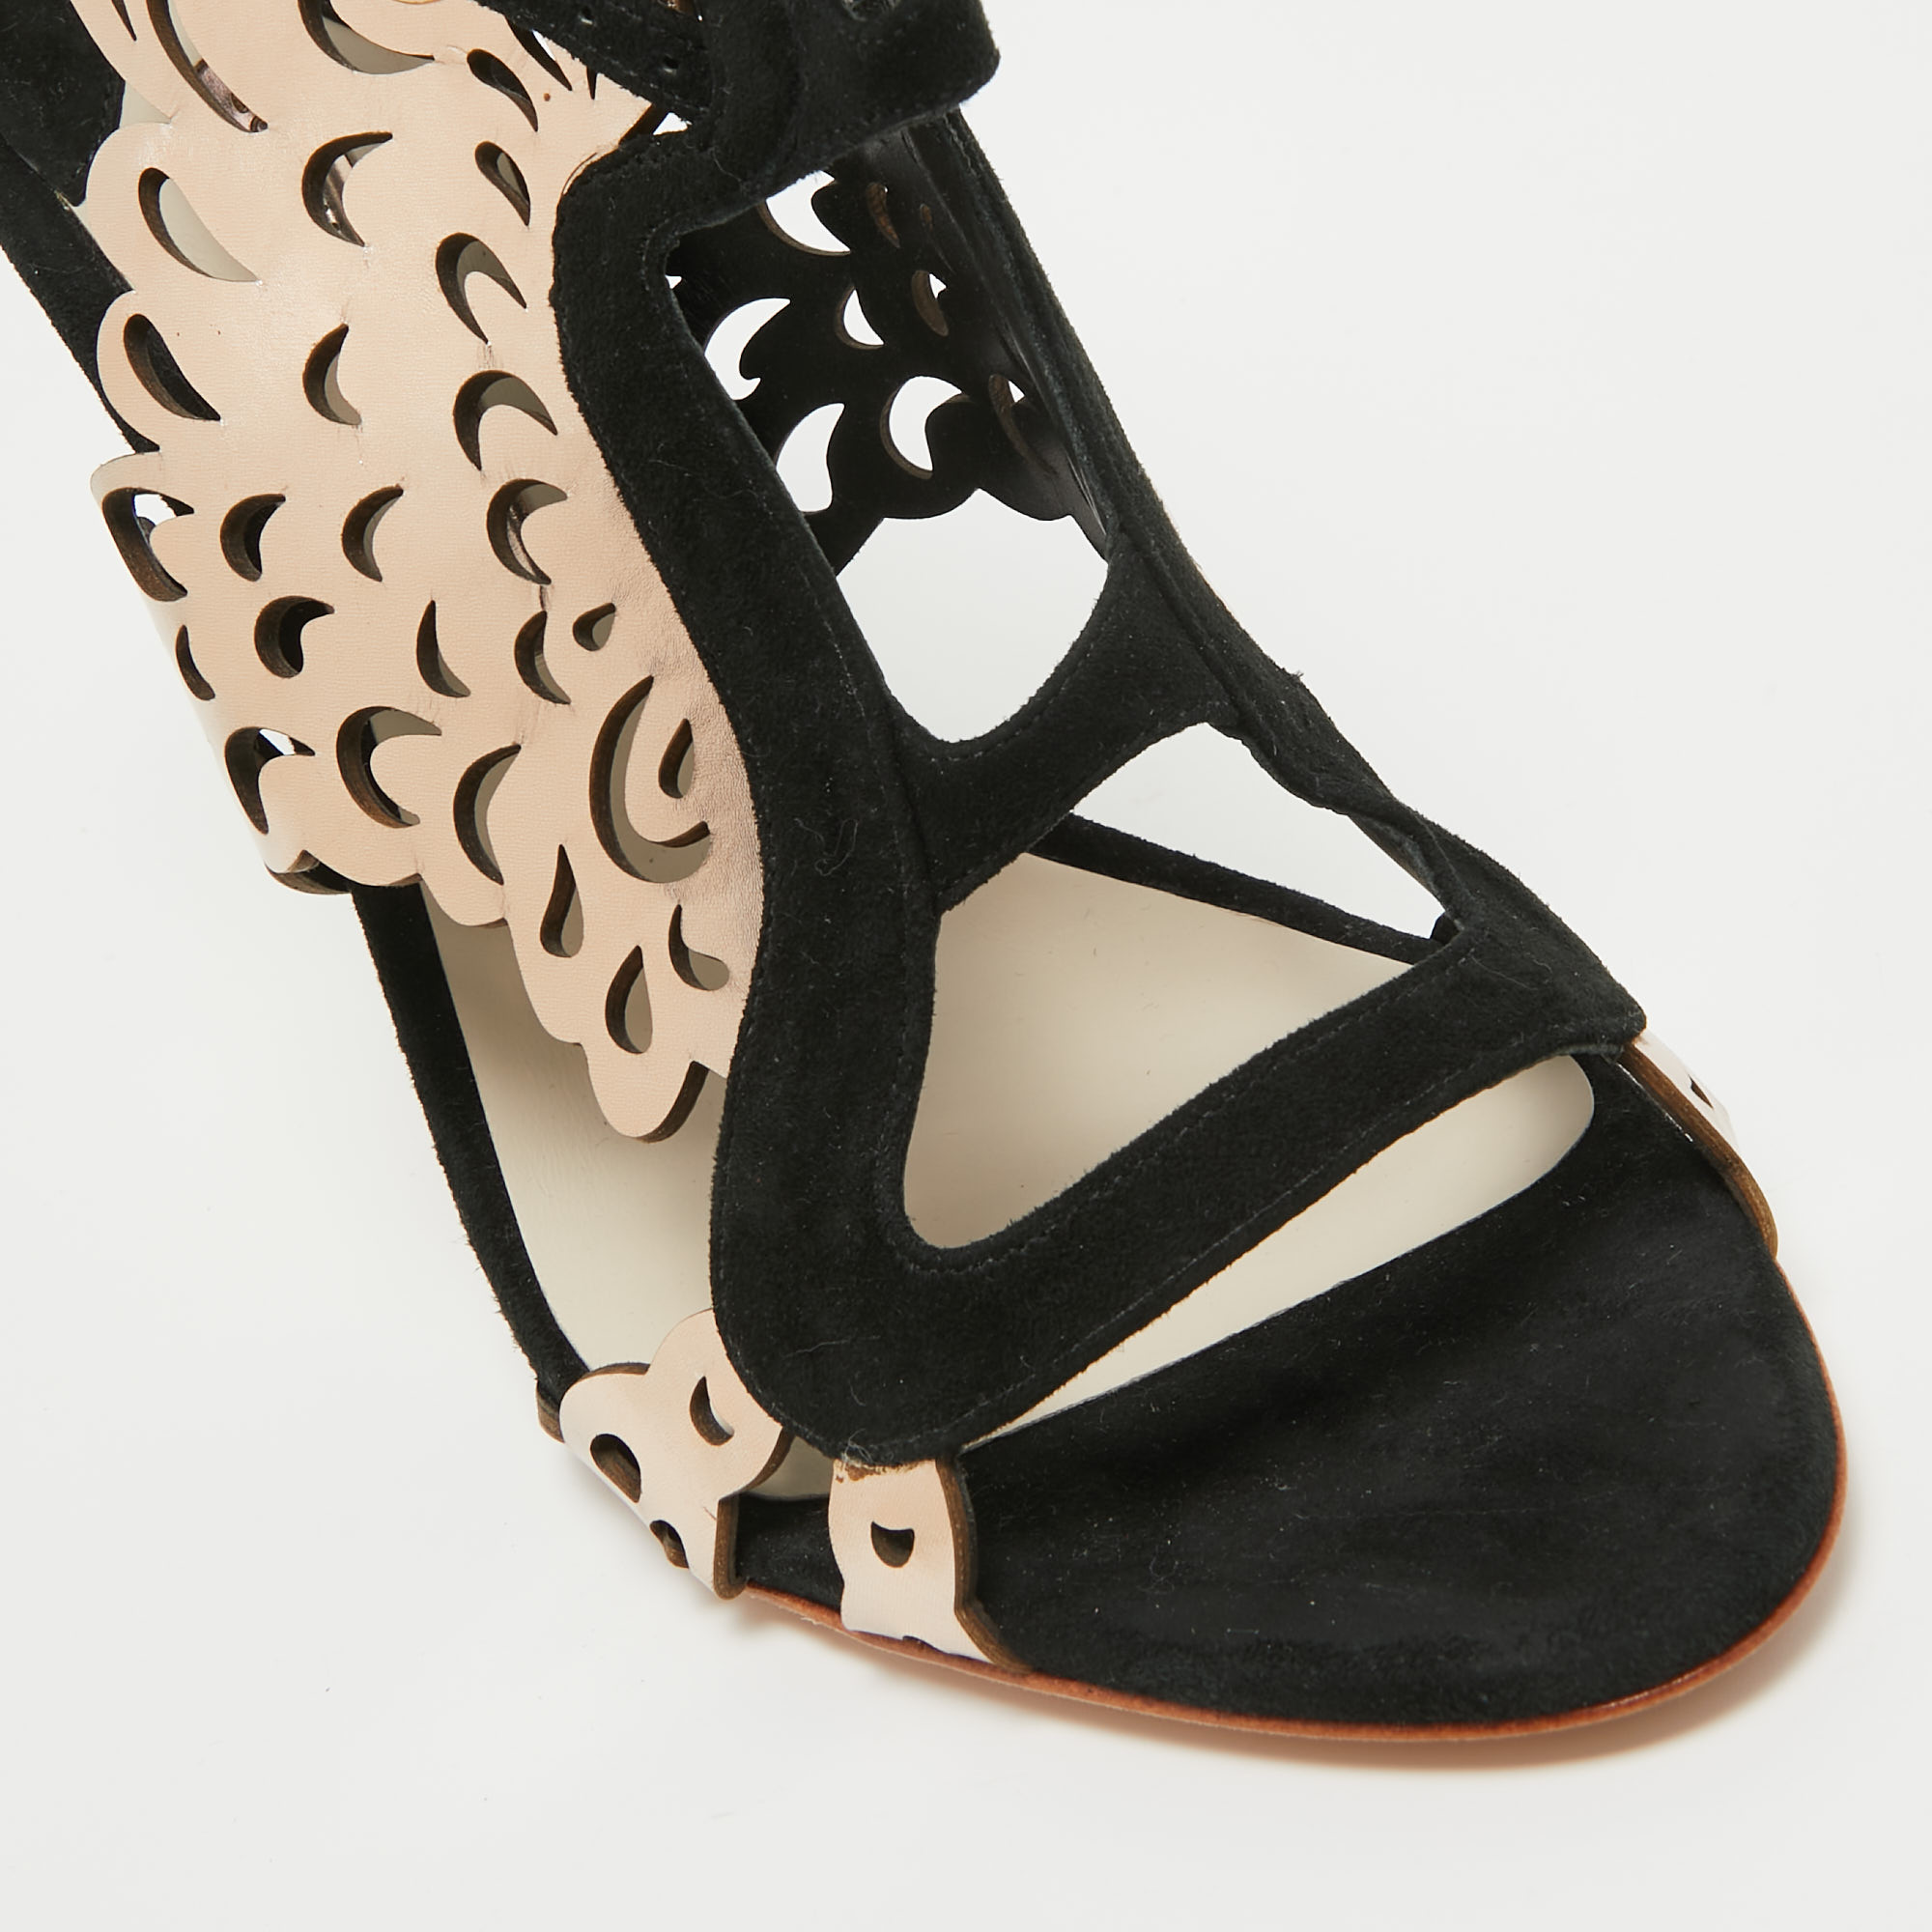 Sophia Webster Black/Rose Gold Suede And Leather Parisa Sandals Size 40